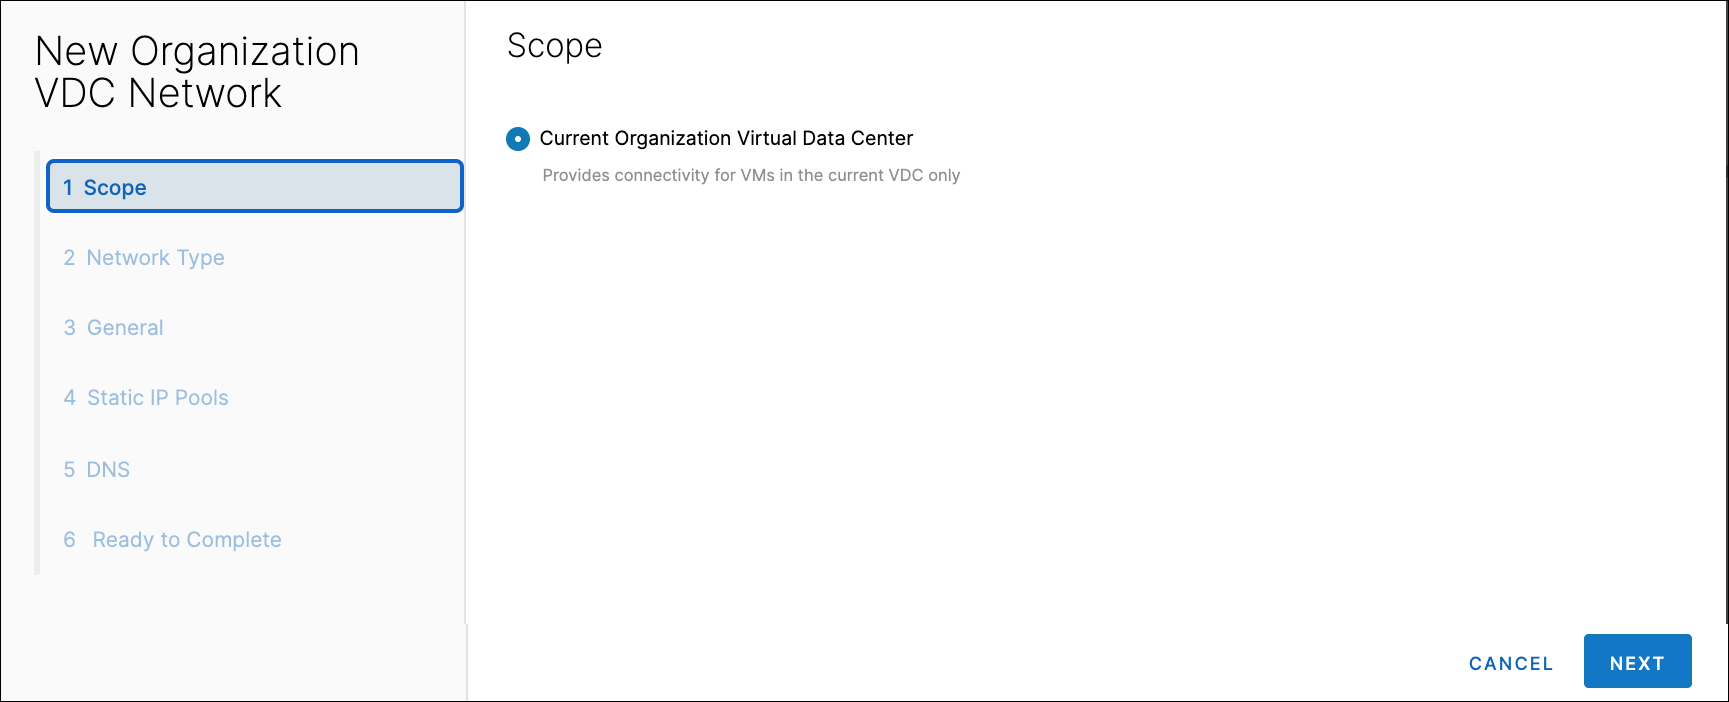 New Organization VDC Network window, Scope section.